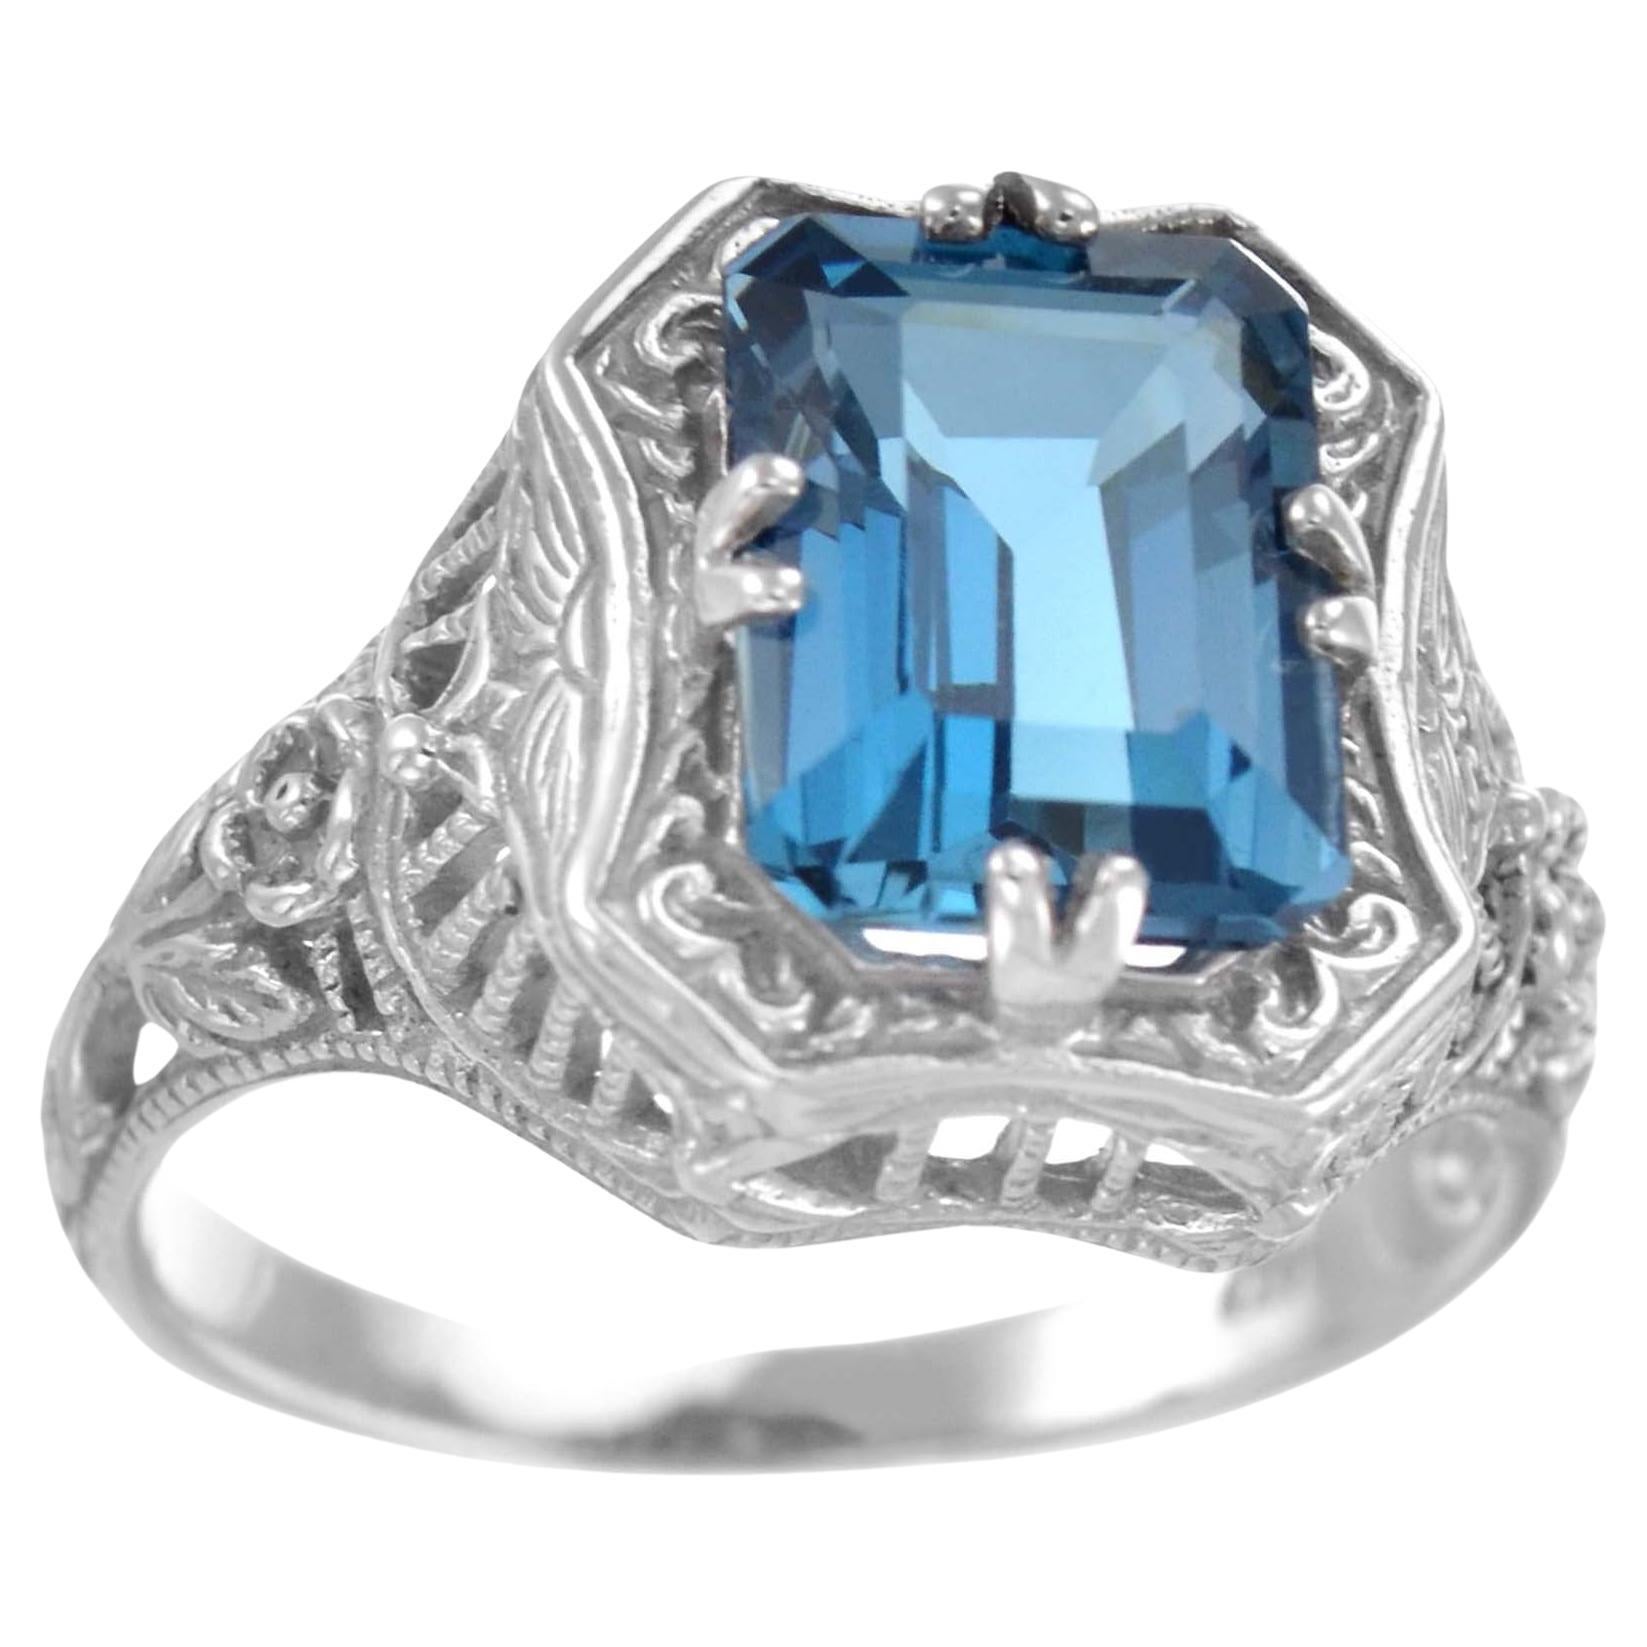 For Sale:  3 Ct. Natural London Blue Topaz Vintage Style Floral Filigree Ring in 9K Gold